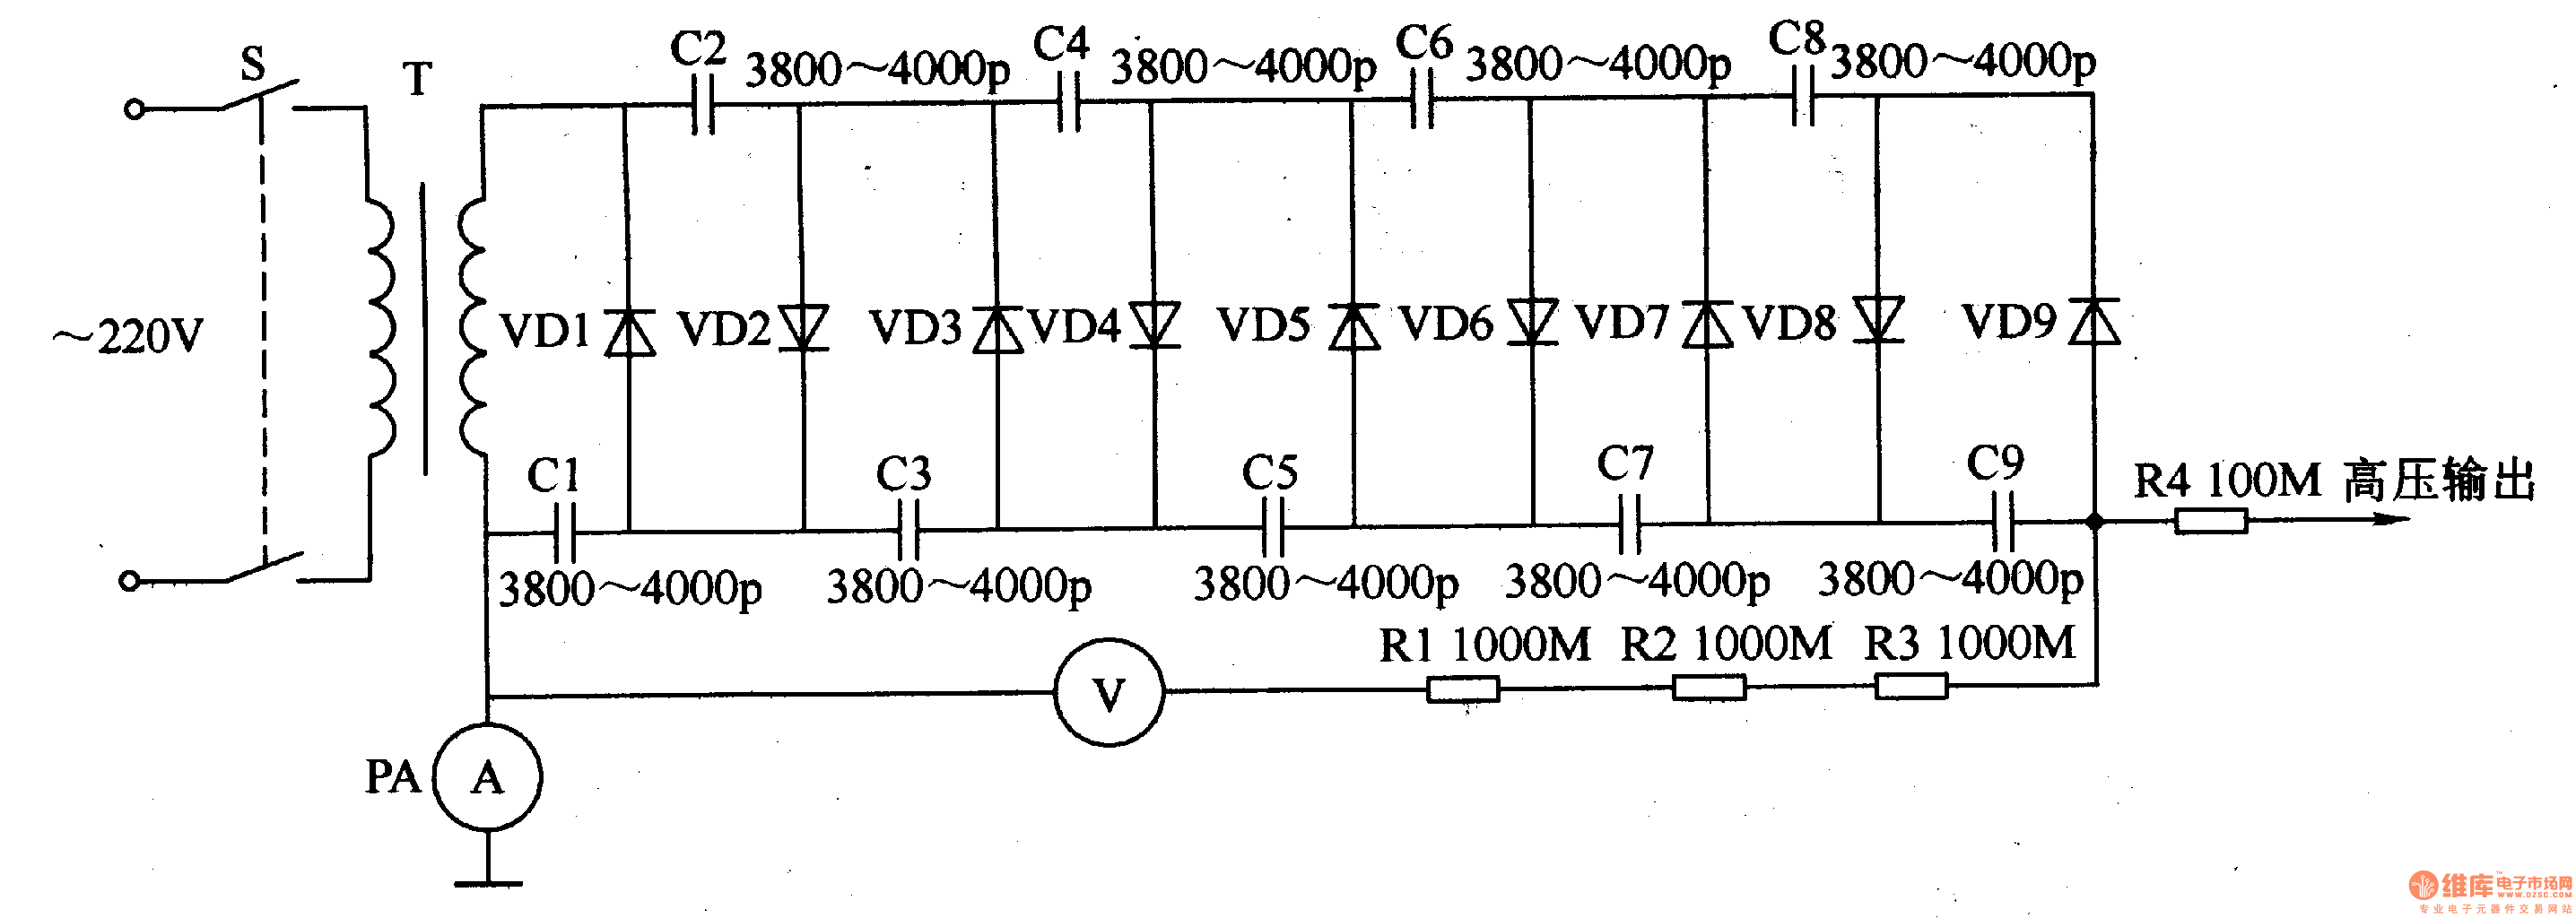 High Voltage Generator Circuit Diagram - General Wiring Diagram